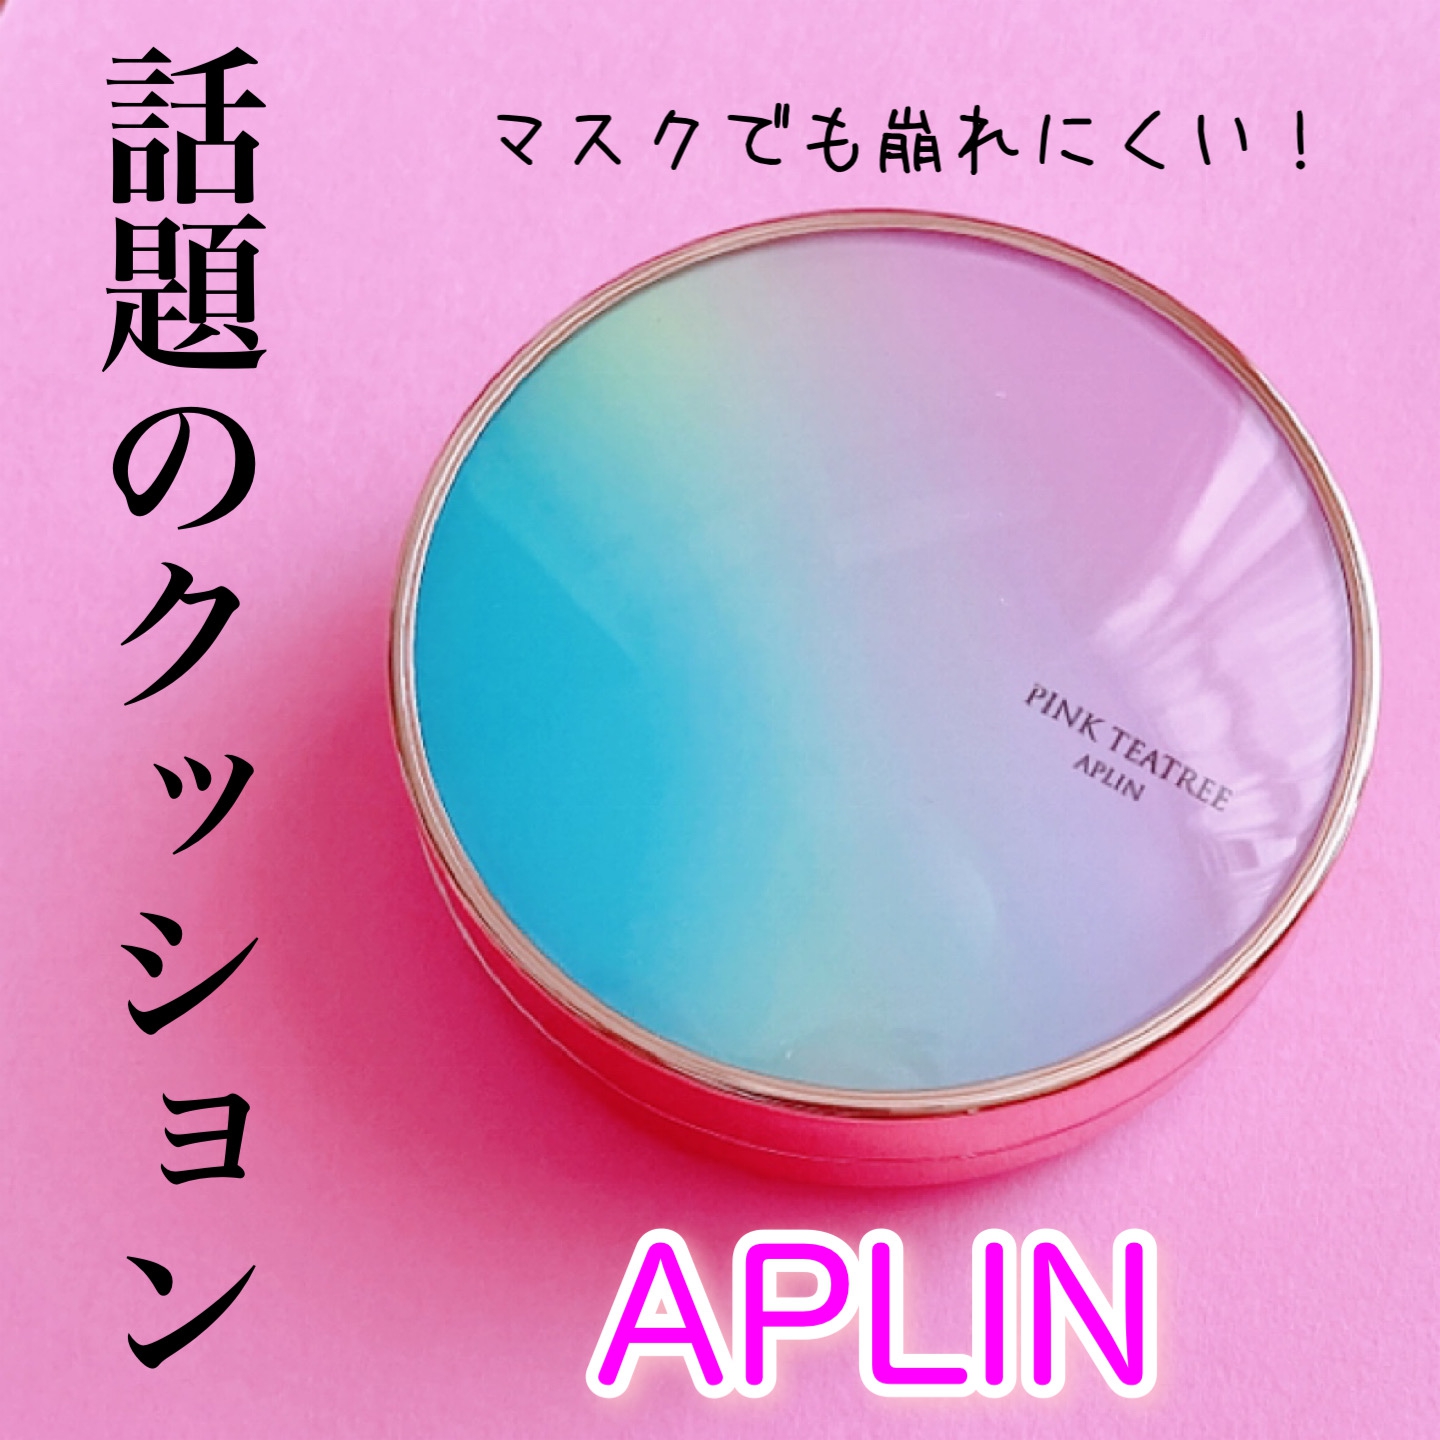 APLIN(アプリン) ピンクティーツリーカバークッションの良い点・メリットに関するyunaさんの口コミ画像1